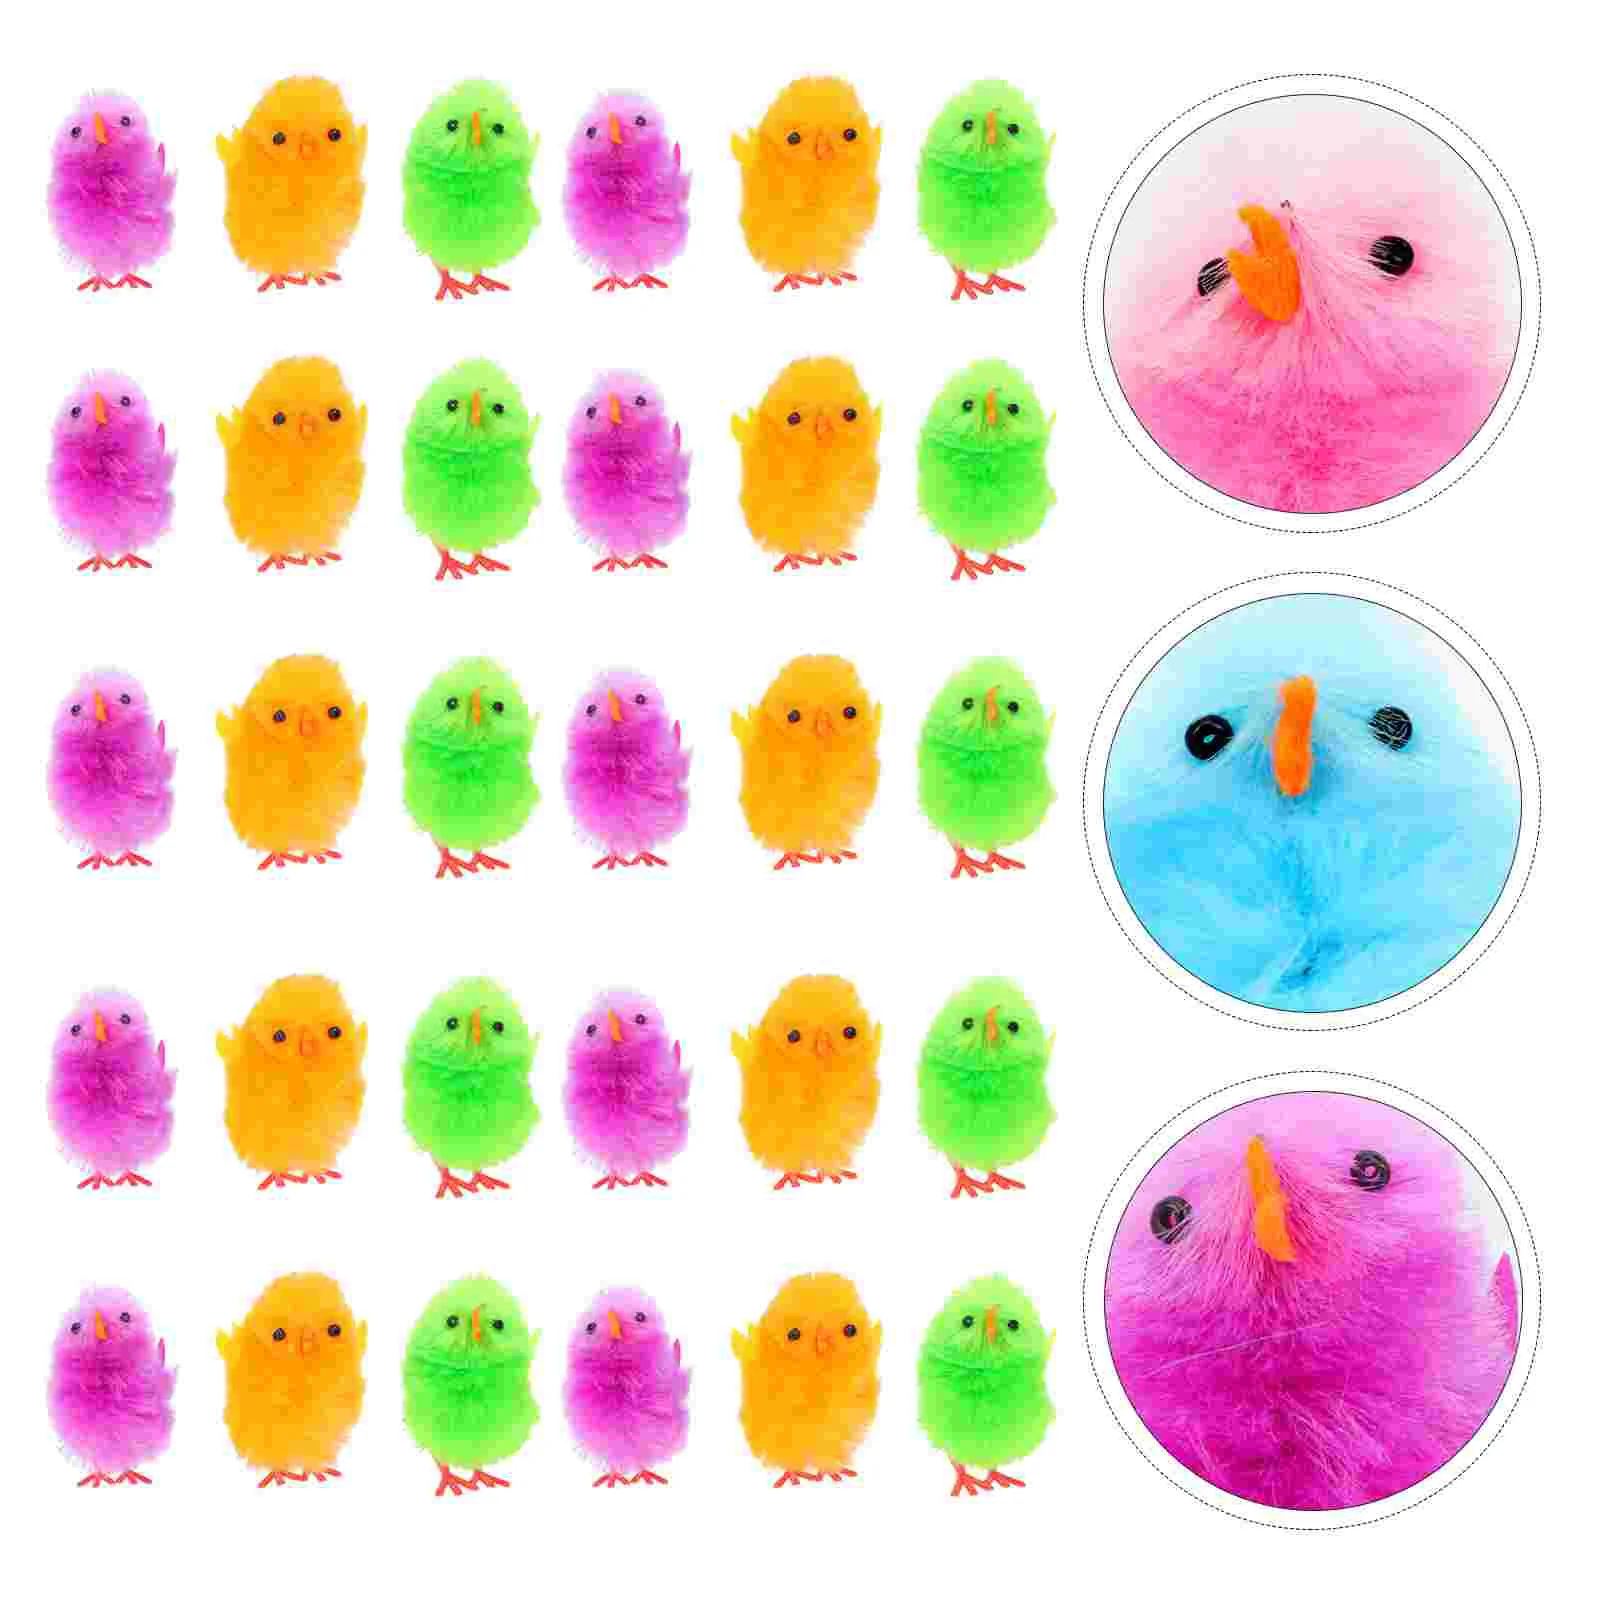 

Easter Chicken Chicks Chick Decor Ornament Party Desktop Mini Prop Decoration Fluffy Decorative Coloured Simulation Plush Fake